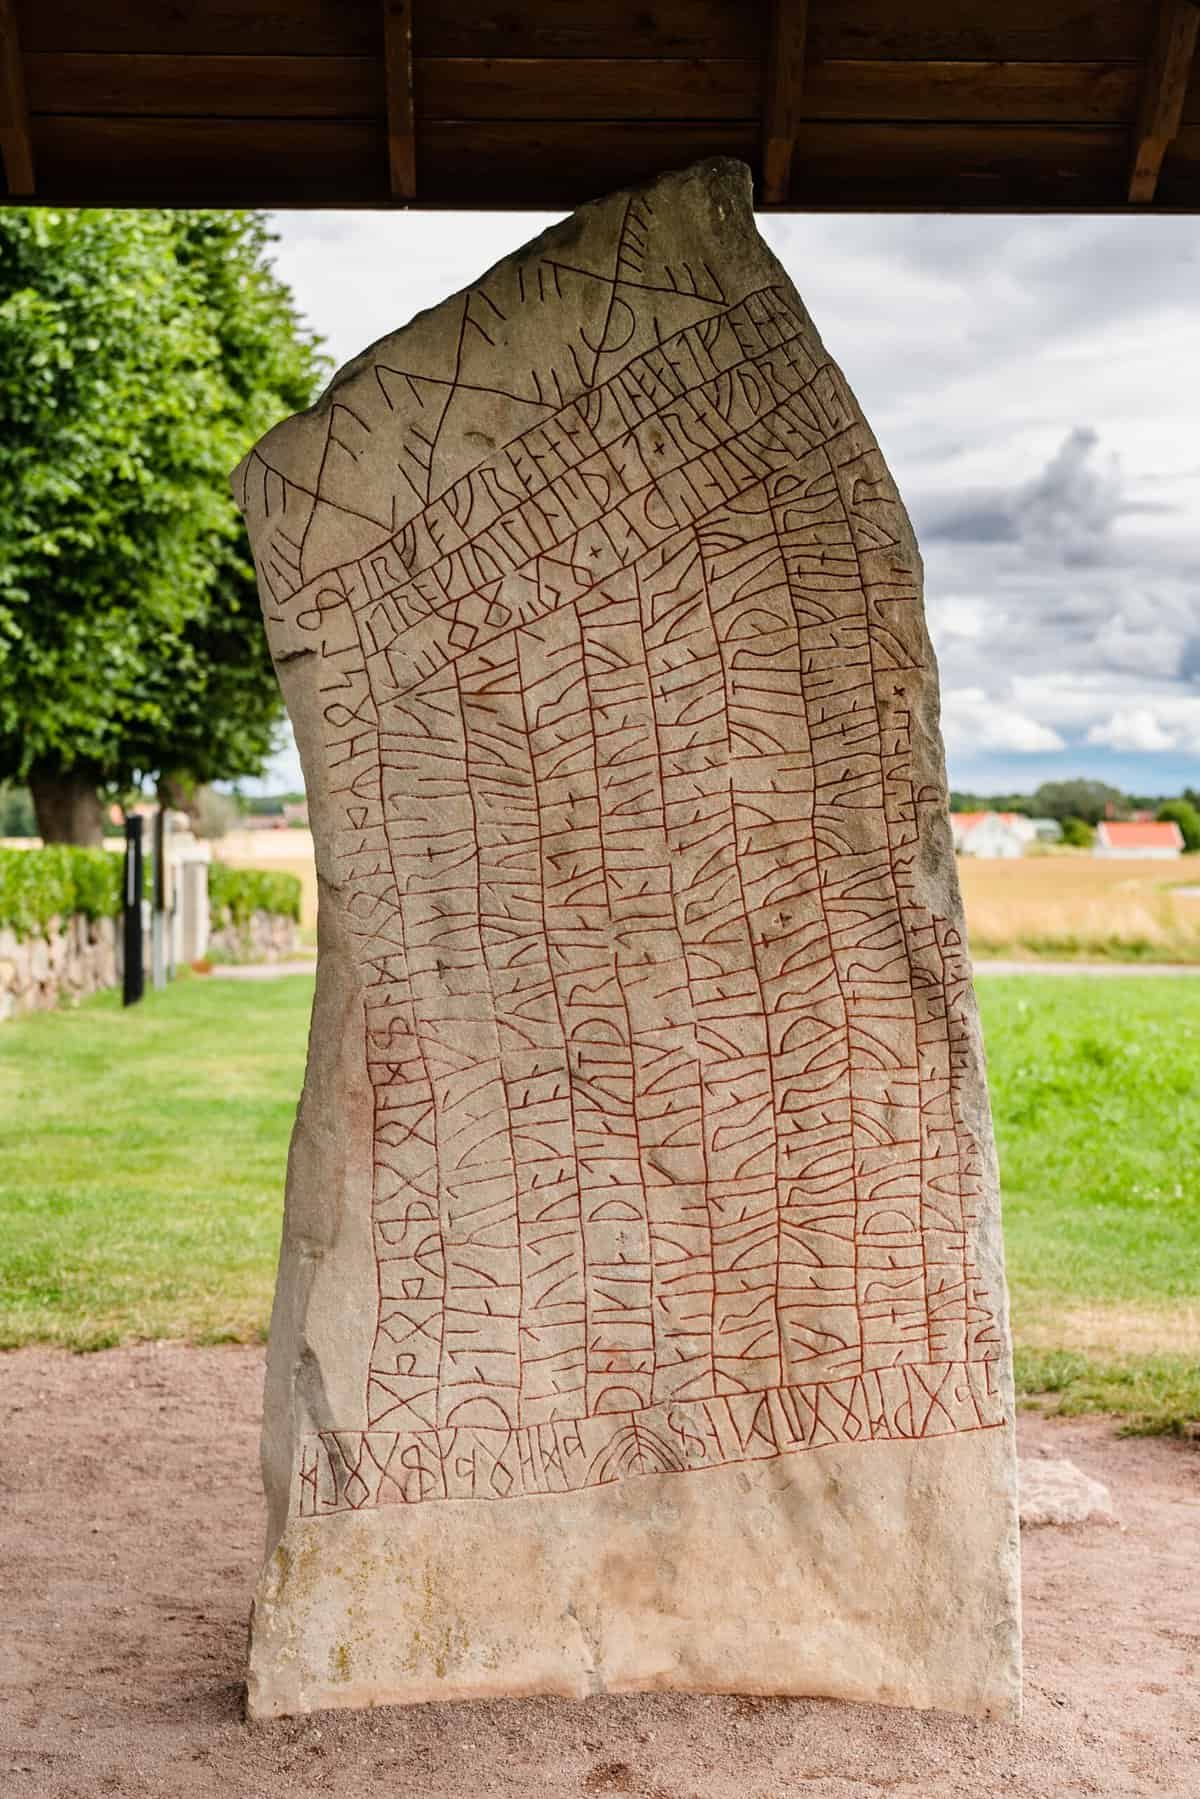 The Rök rune stone